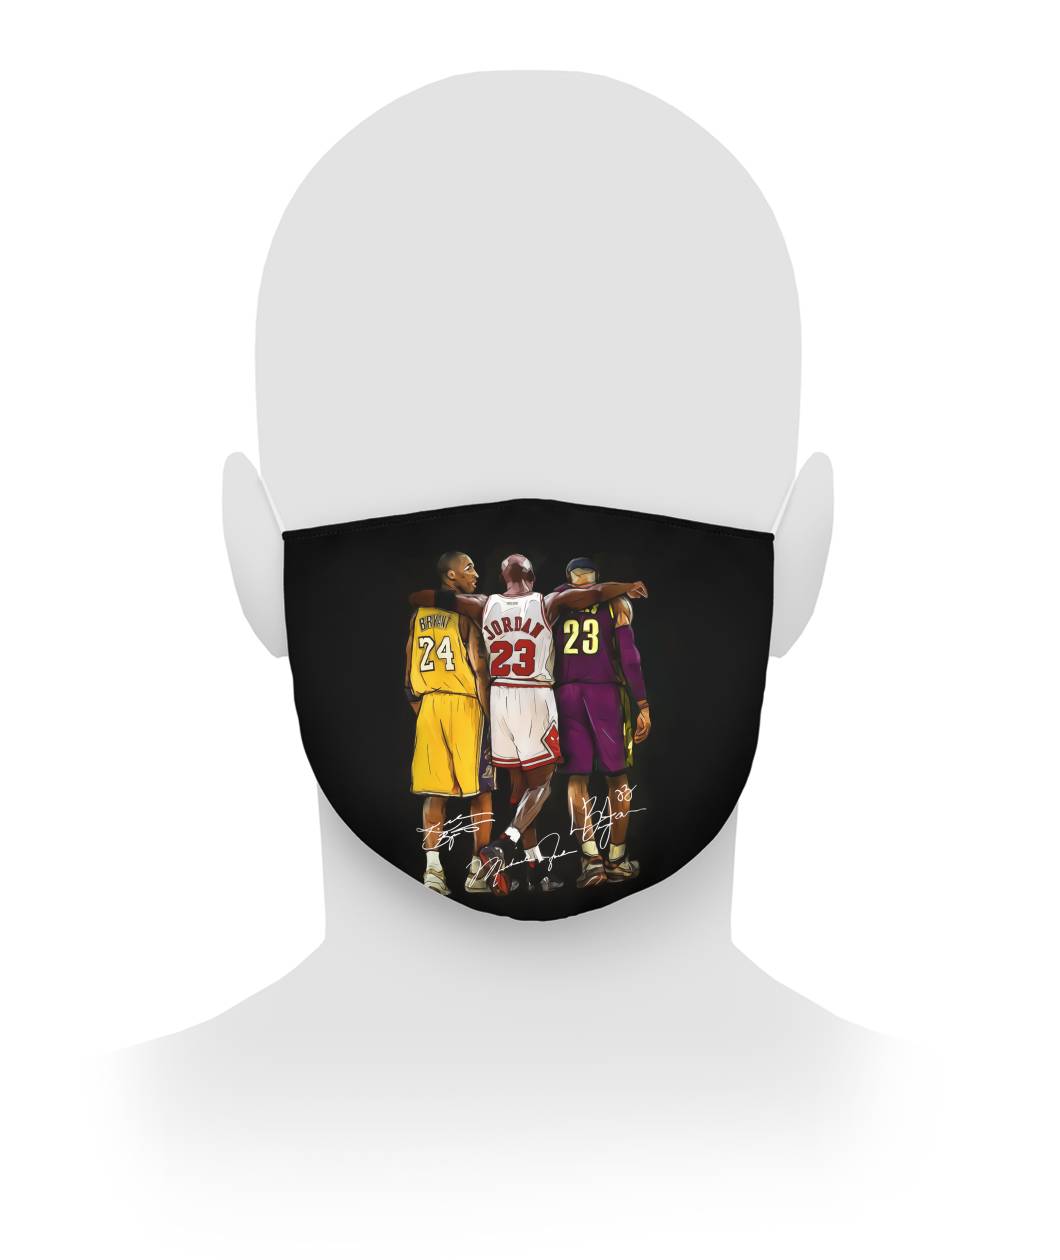 Kobe Bryant Michael Jordan LeBron James face mask - detail